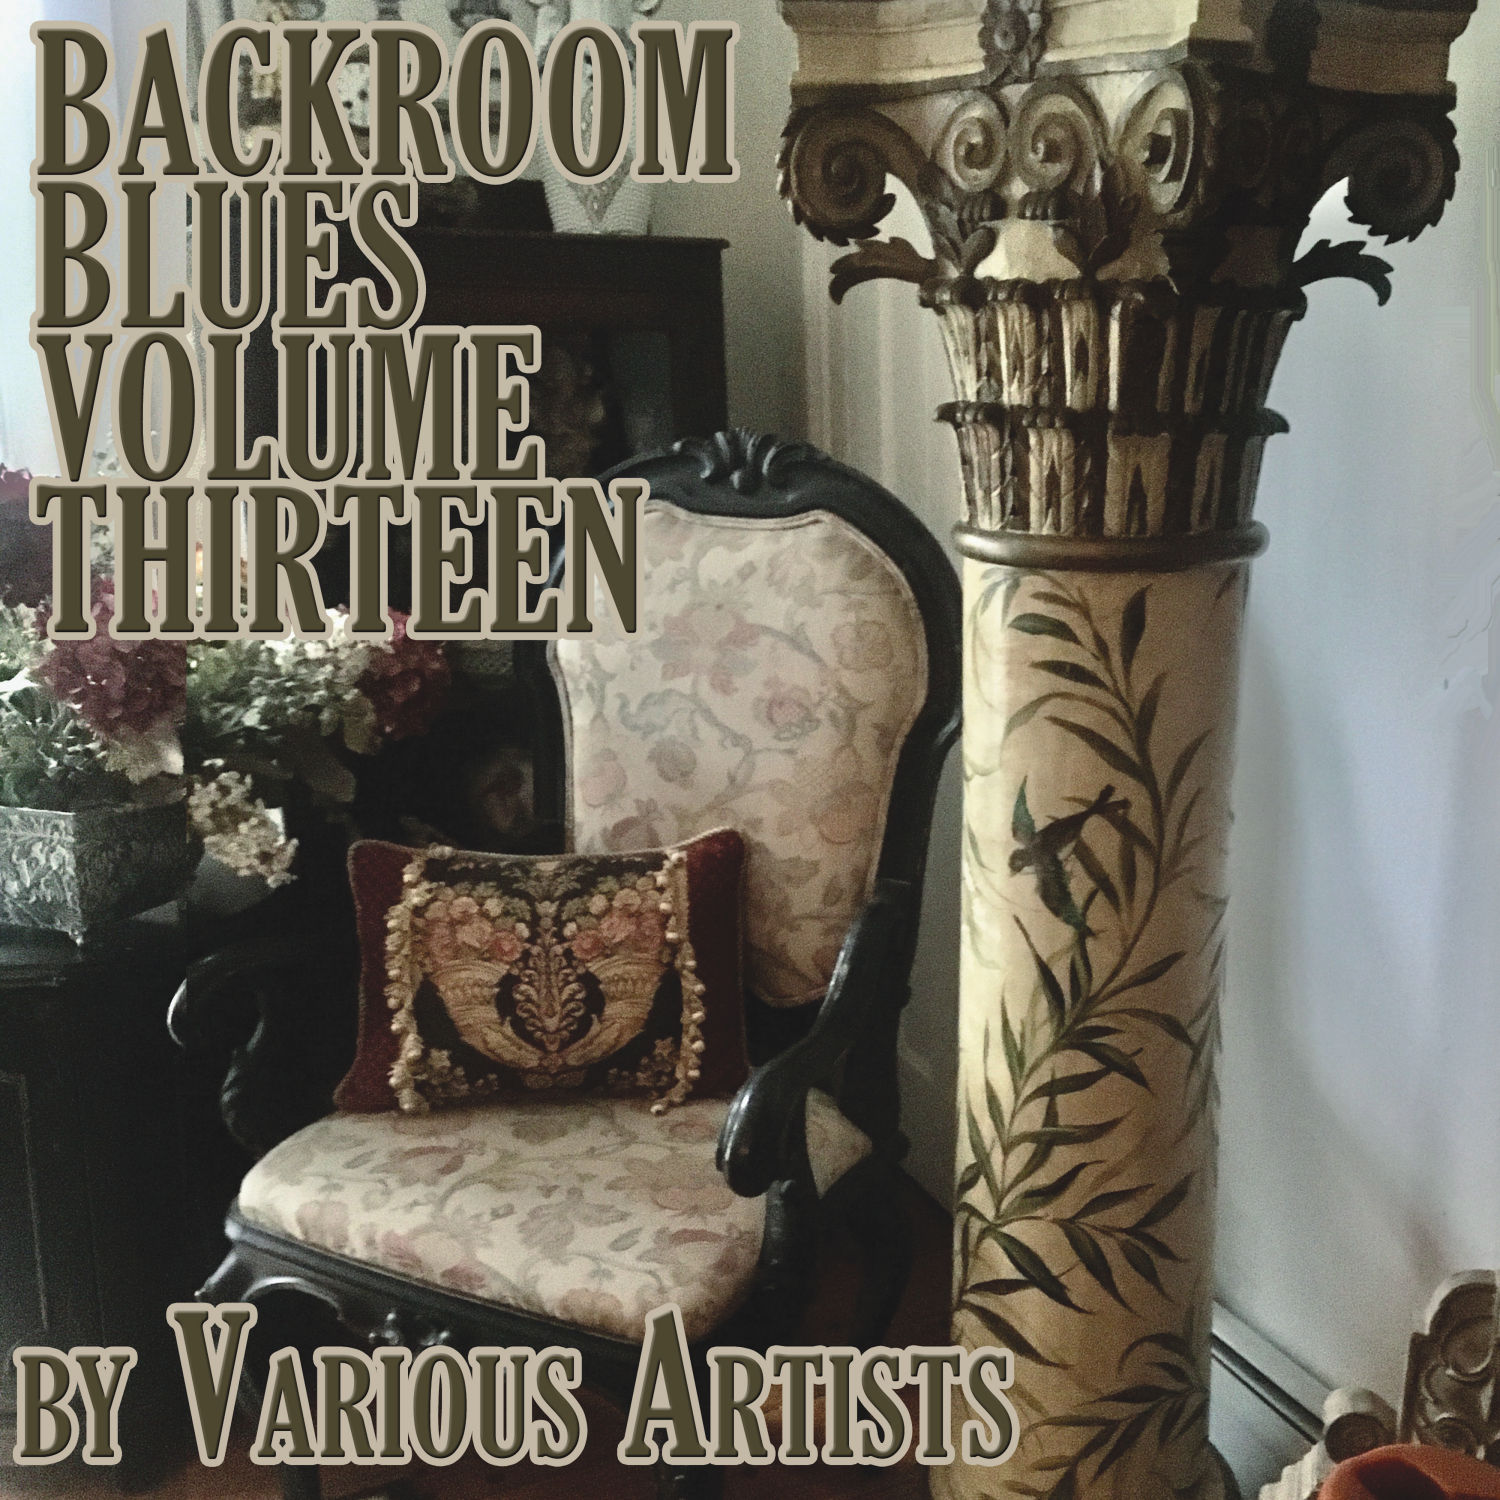 Backroom Blues Volume Thirteen